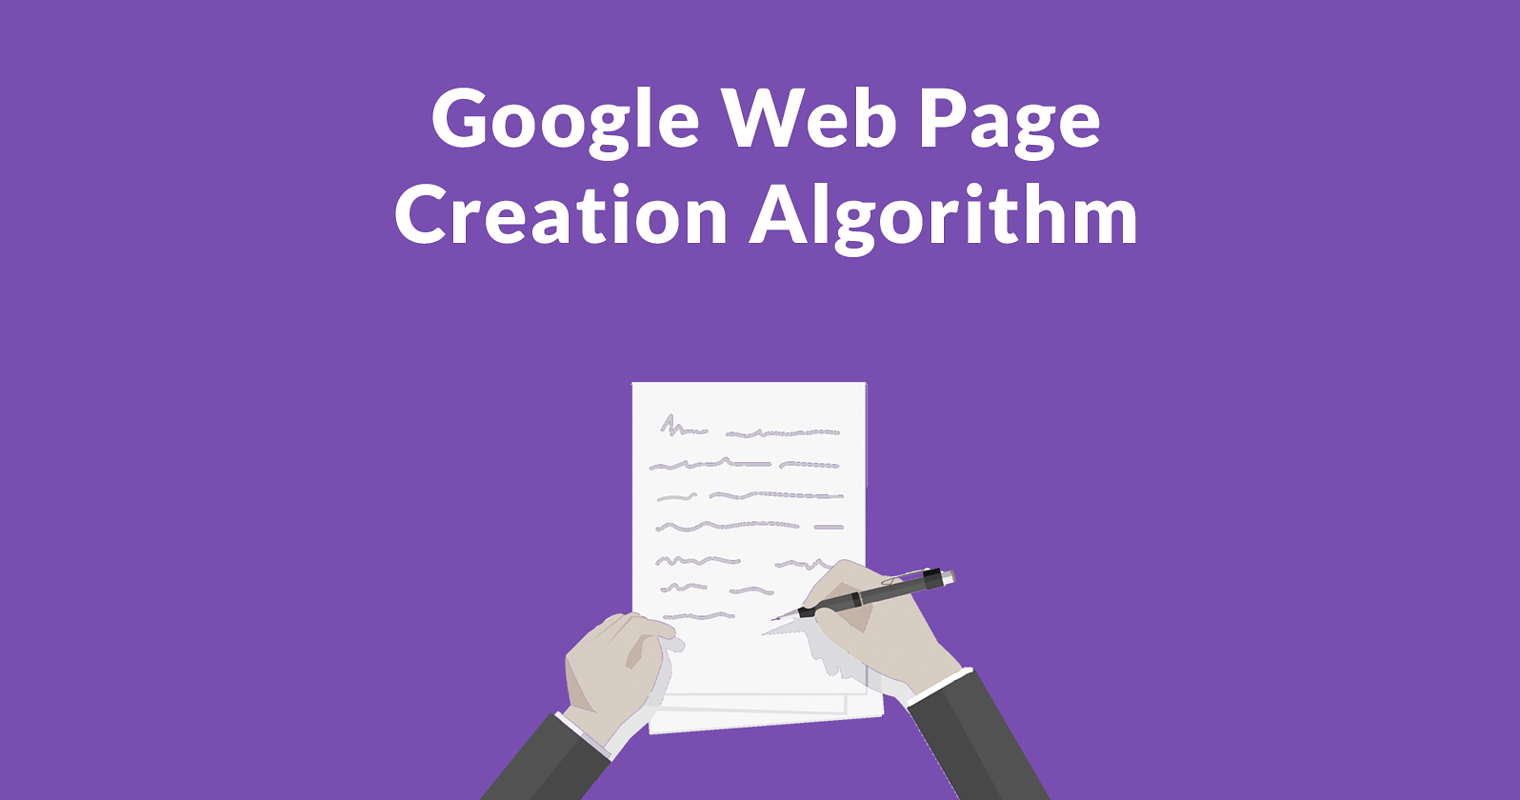 Google’s New Algorithm Creates Original Articles From Your Content